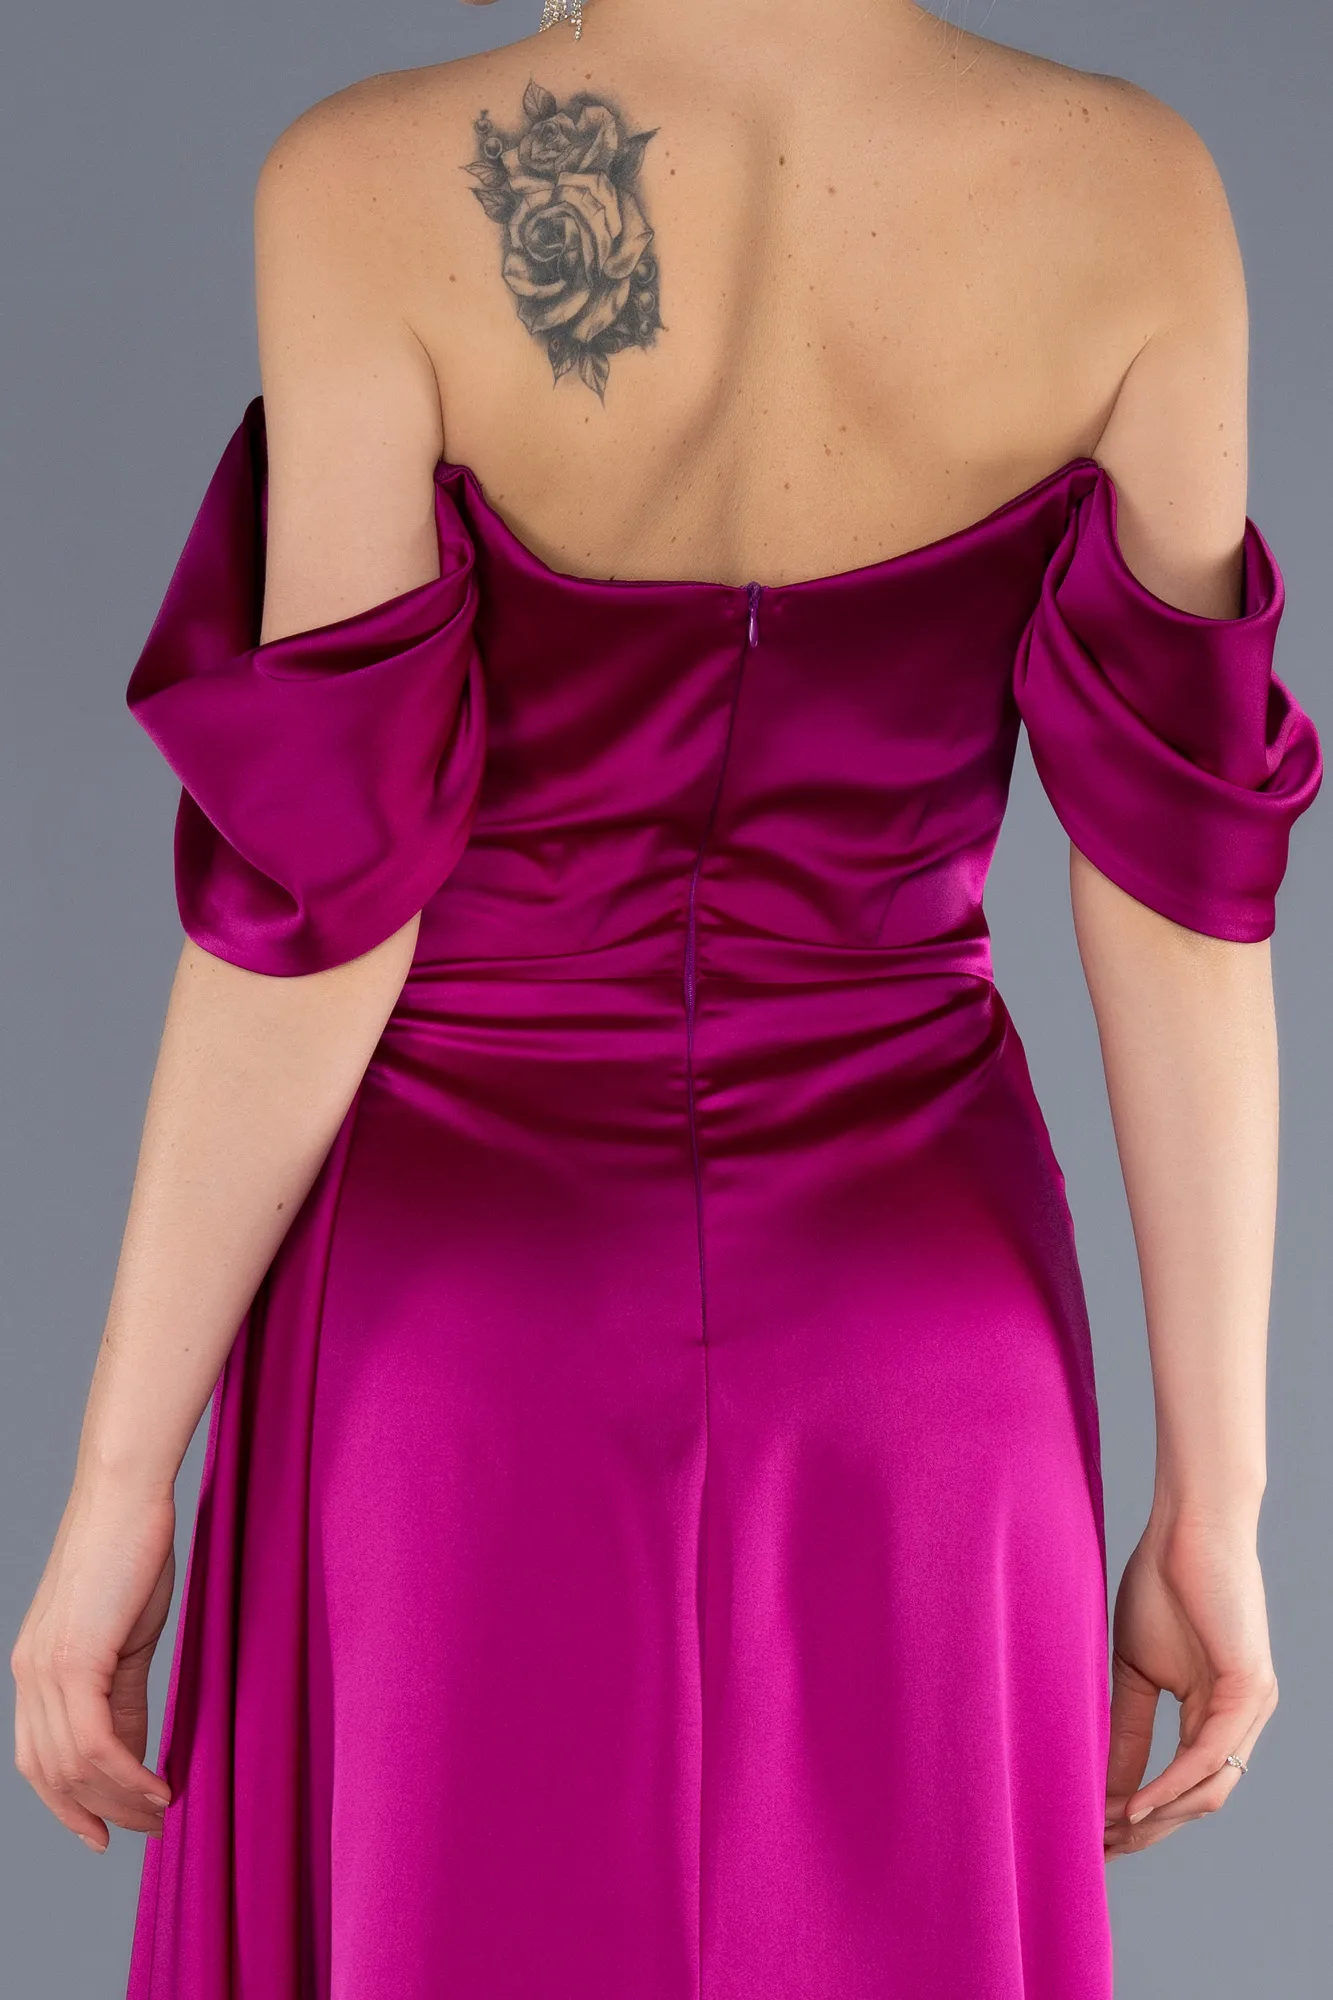 Violet-Long Satin Evening Dress ABU2661